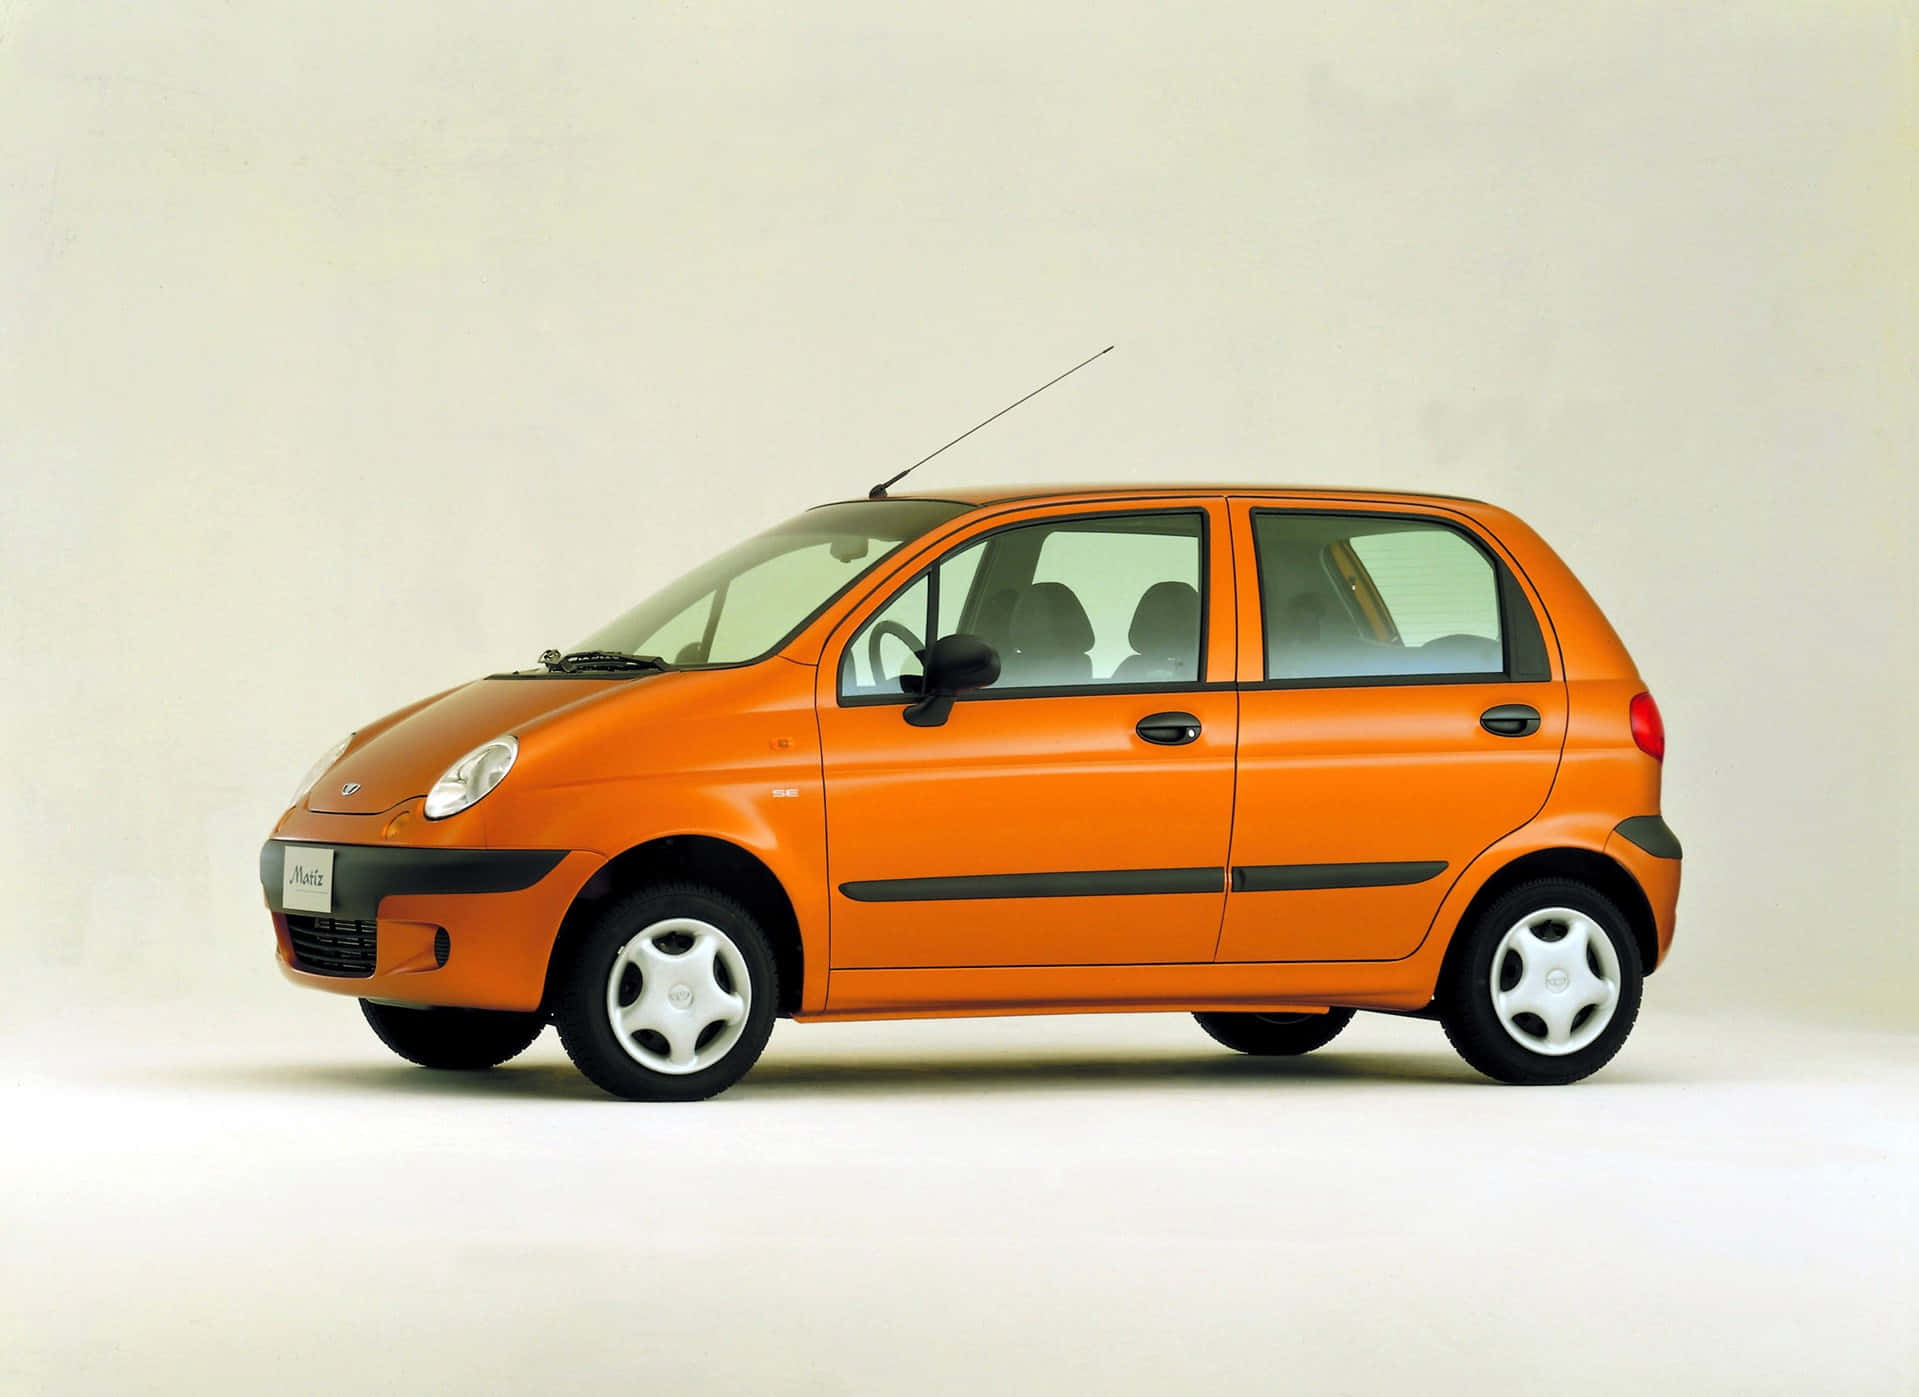 THE ULTIMATE CAR GUIDE: Daewoo Espero - Generation 1 (1995-2000)